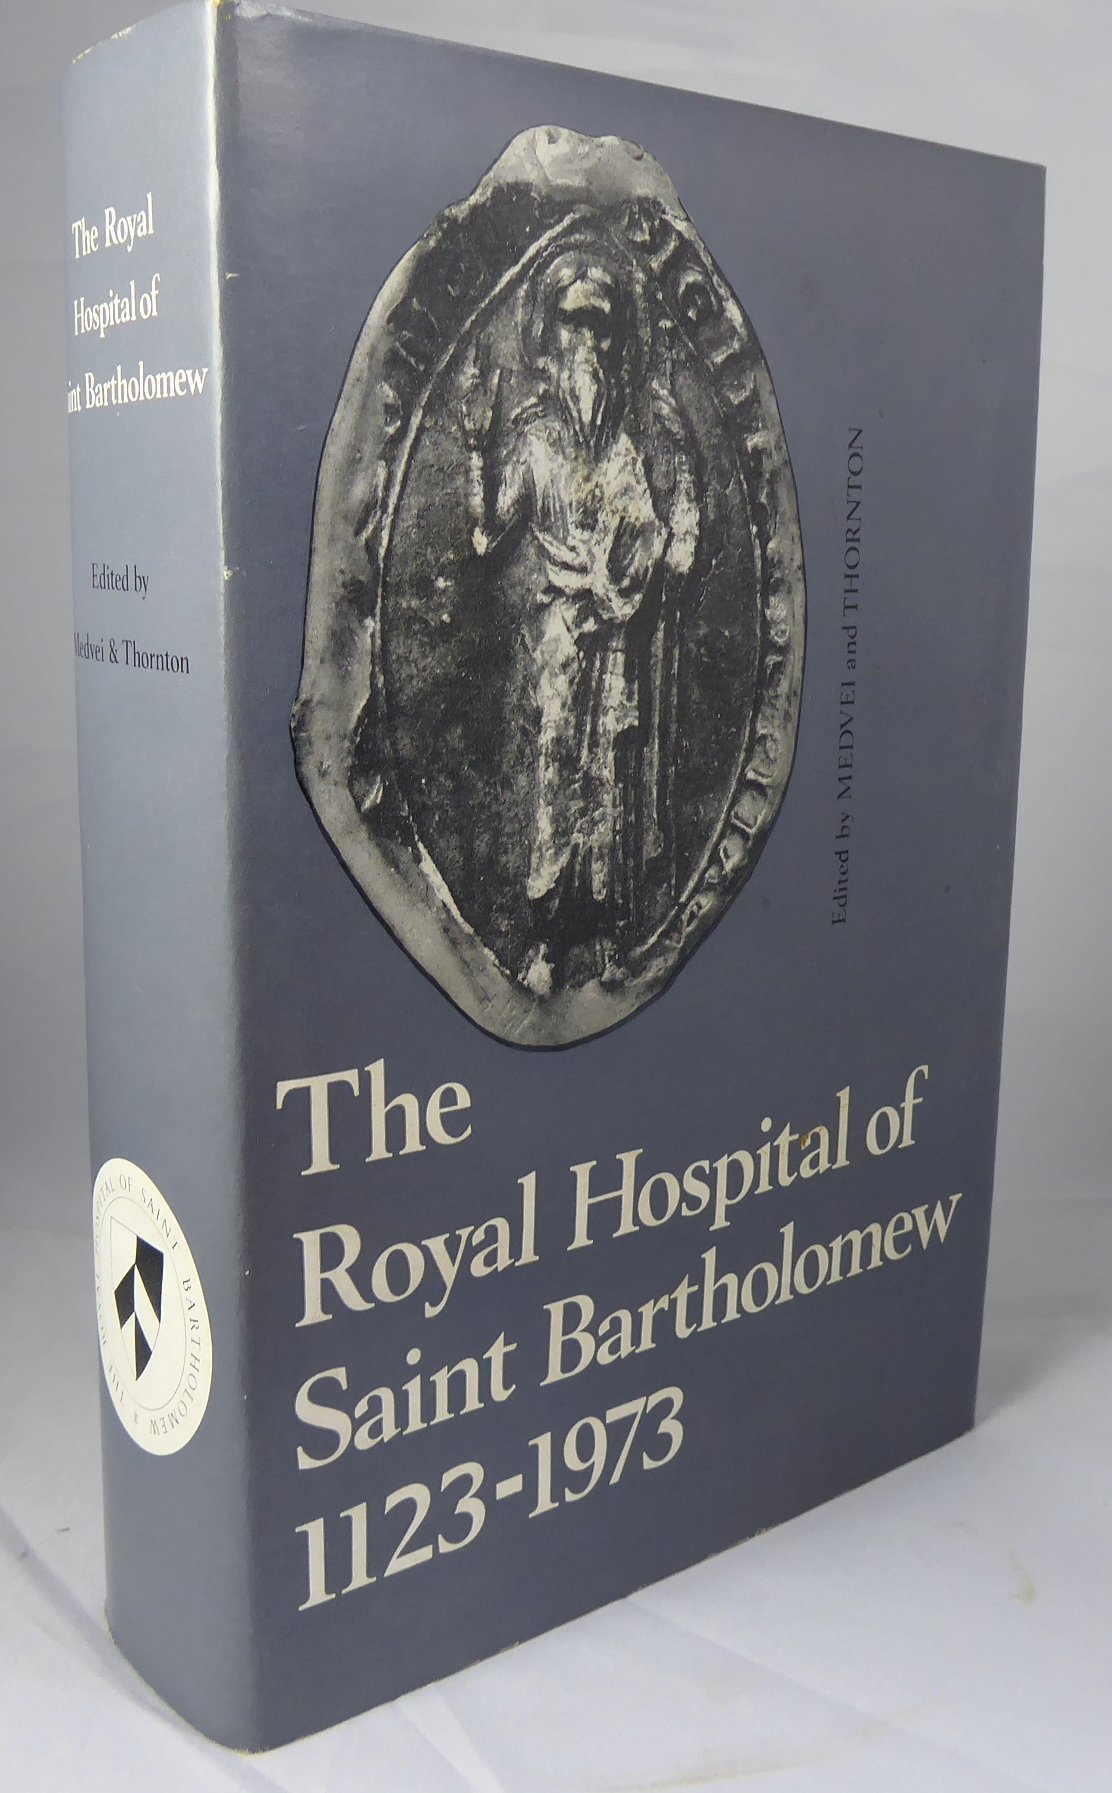 MEDVEI & THORNTON (EDITED BY. ) - The Royal Hospital of Saint Bartholomew 1123-1973